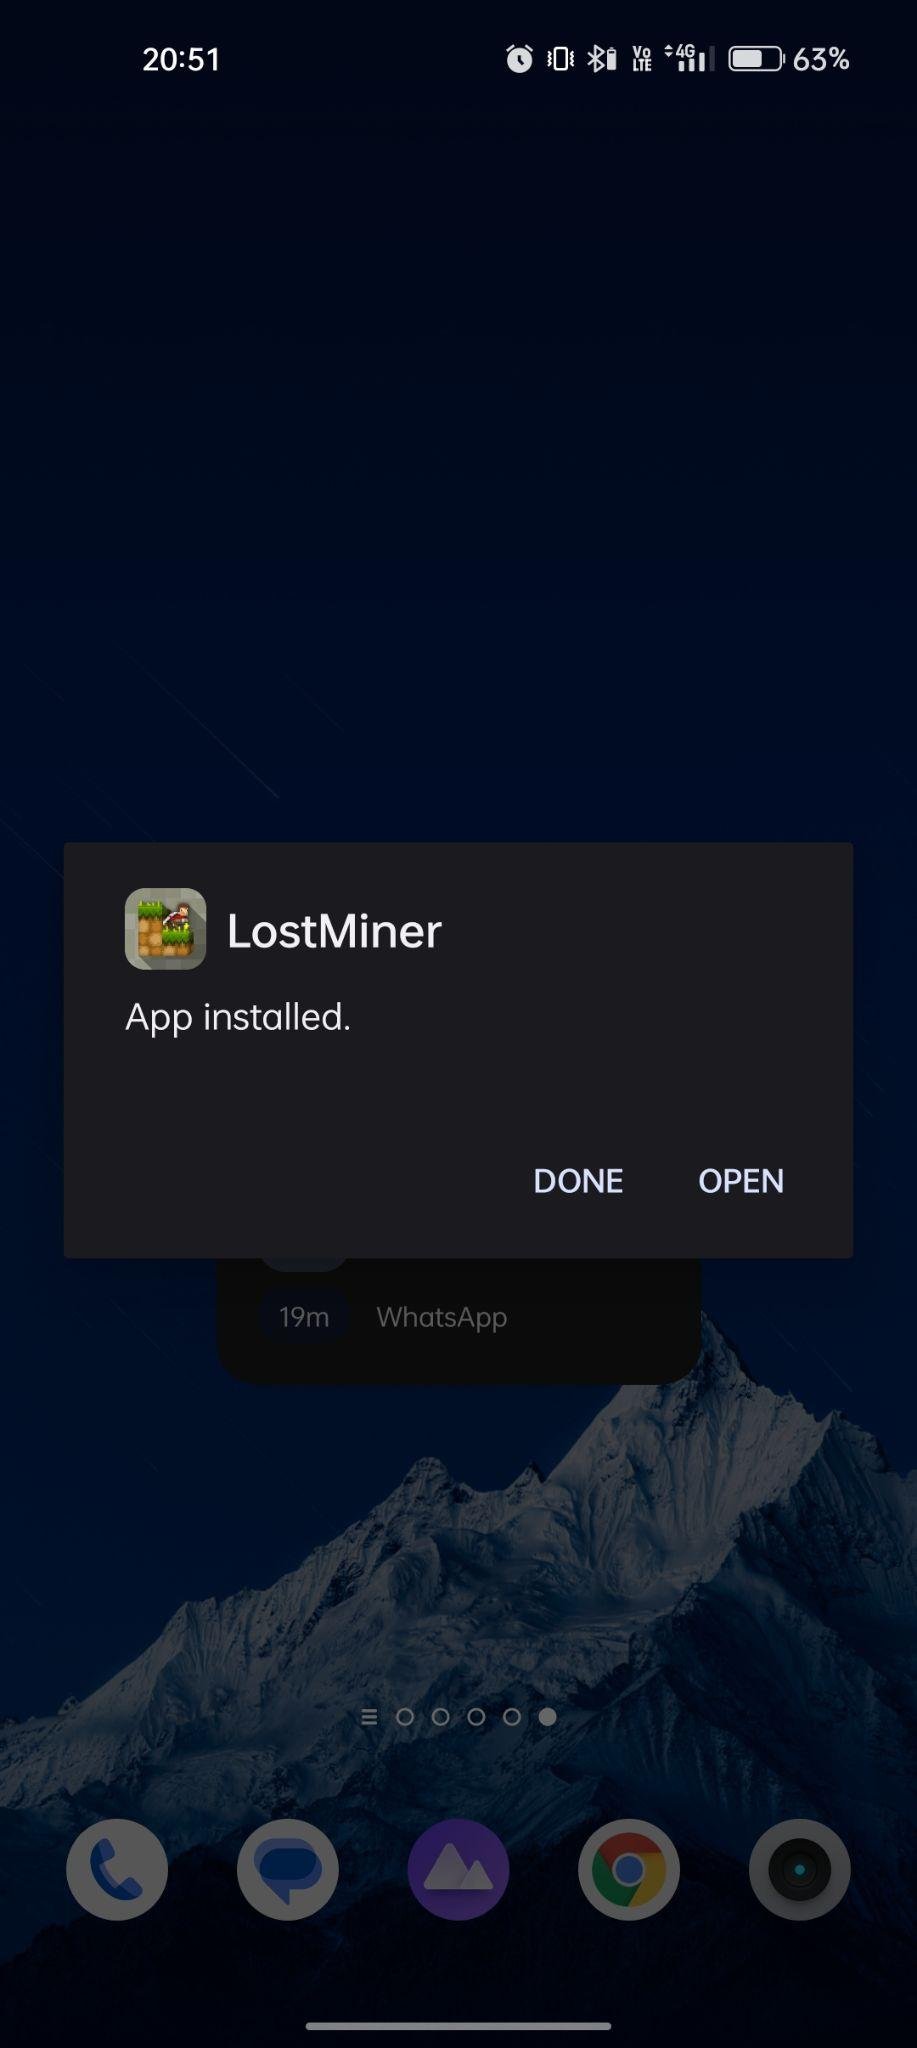 lostminer apk installed